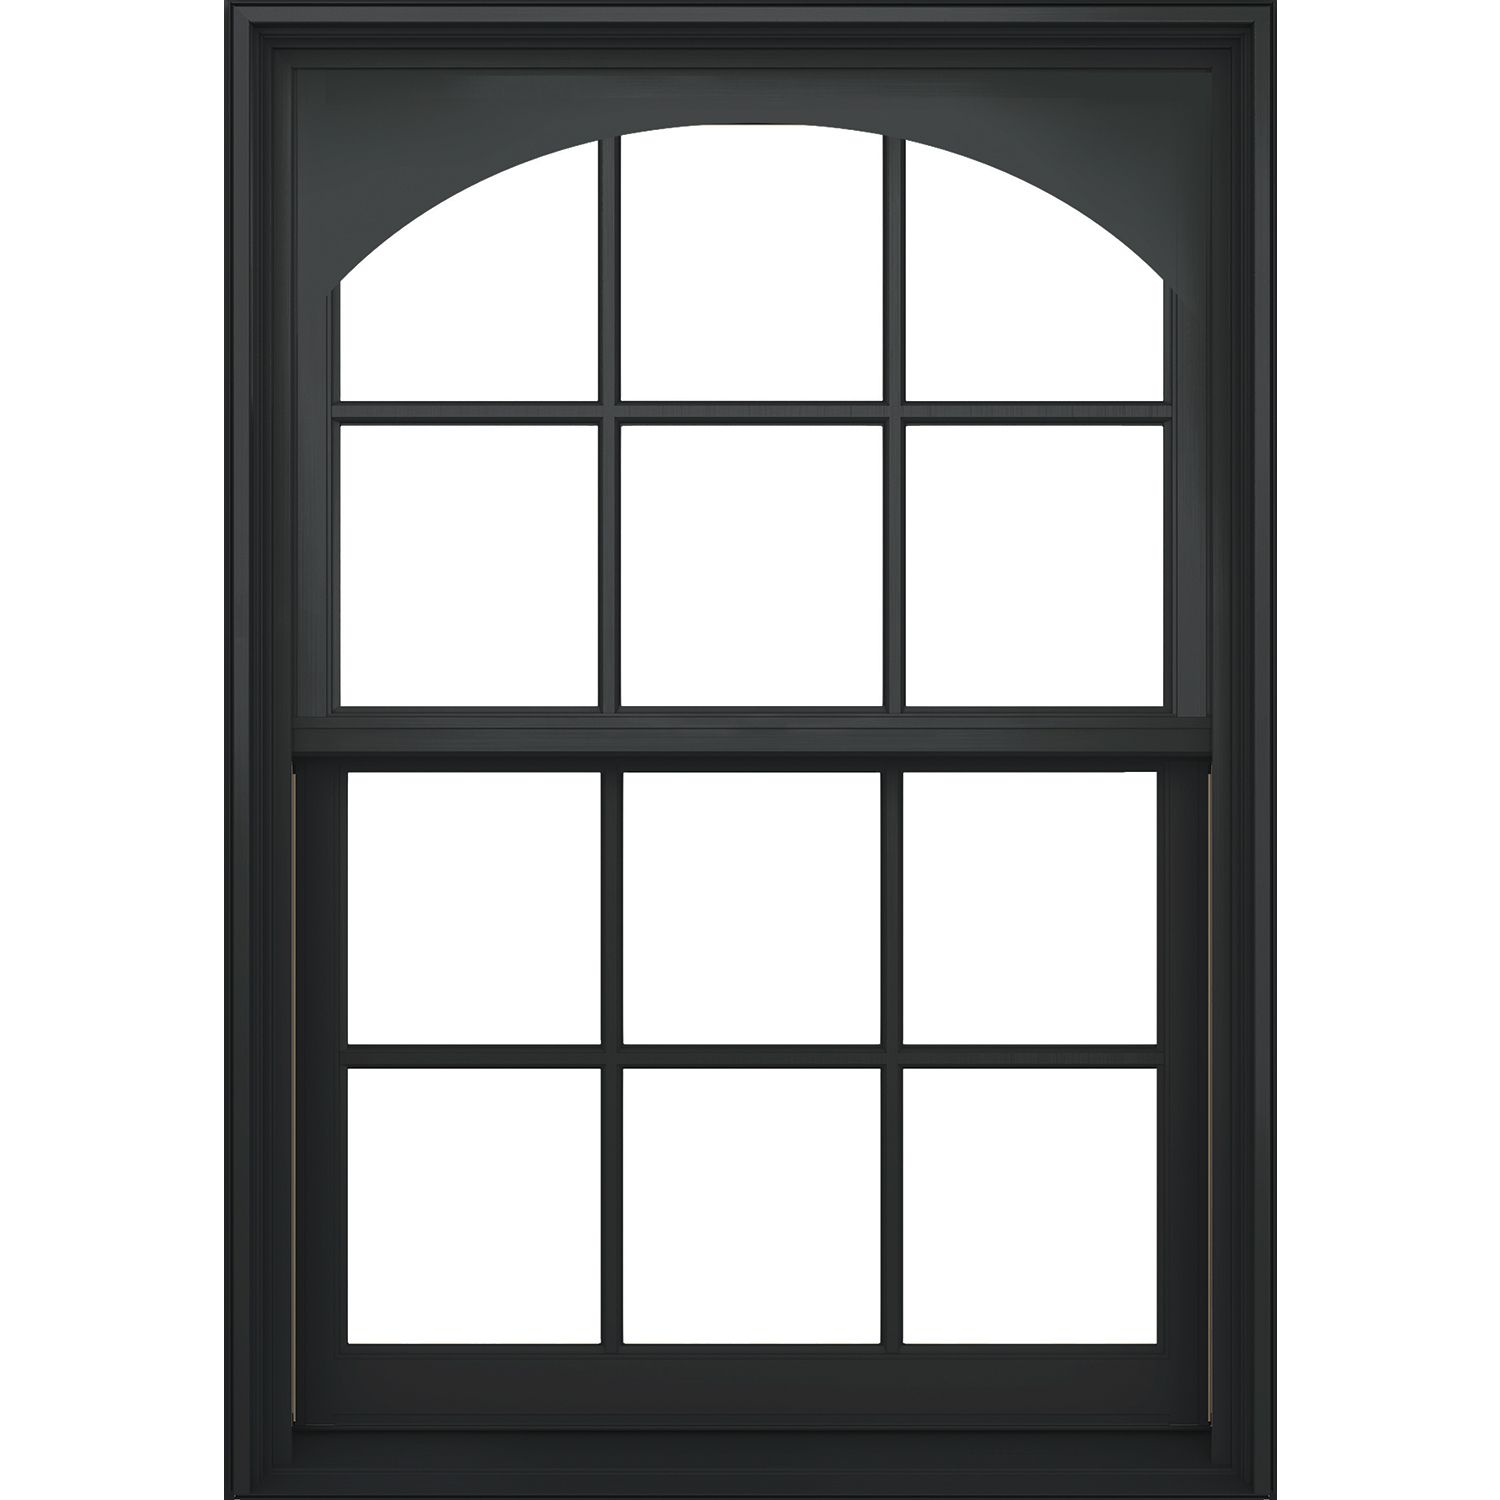 Jeld-Wen windows